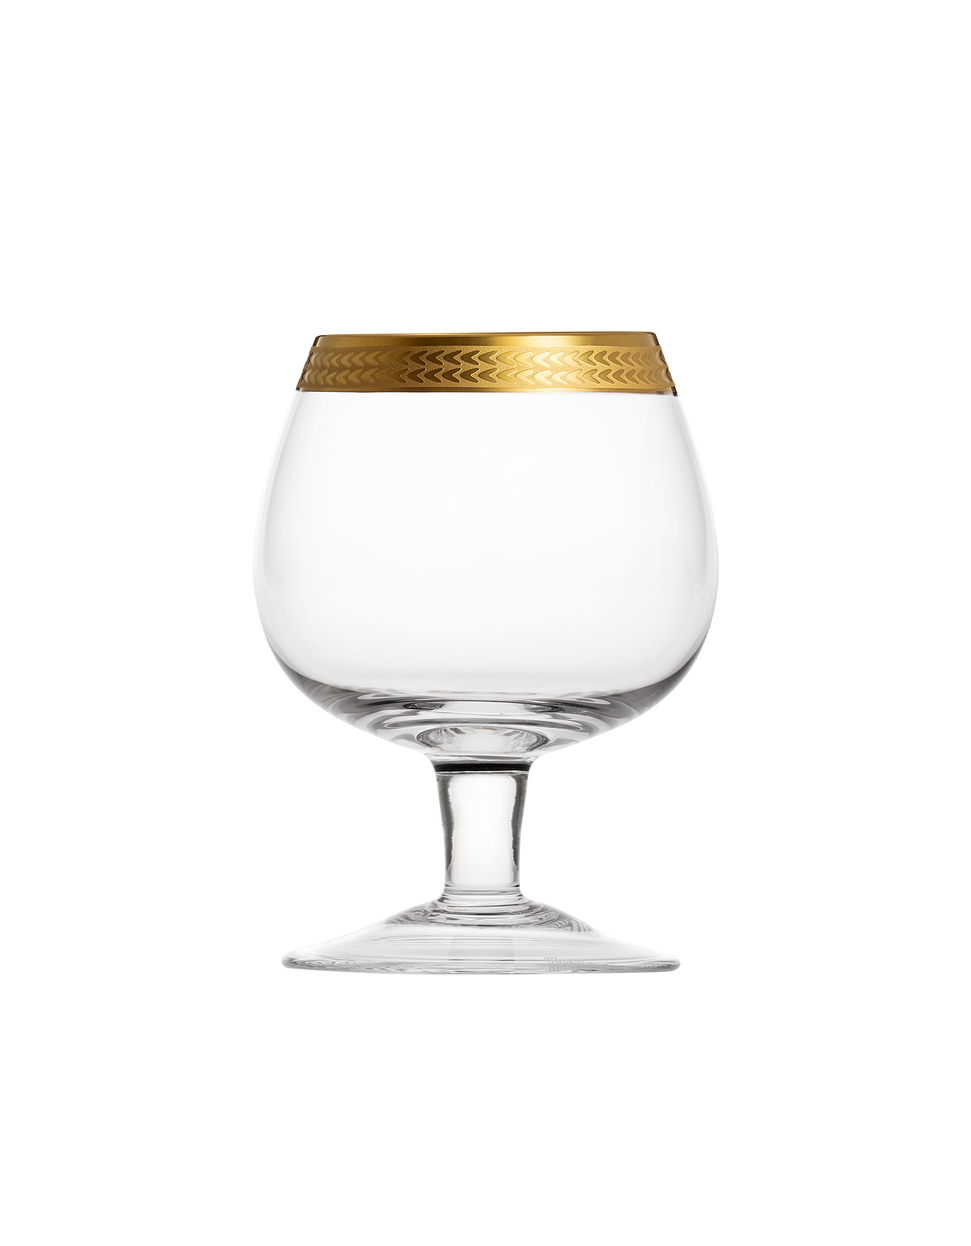 Brandy & Cognac glass, 320 ml